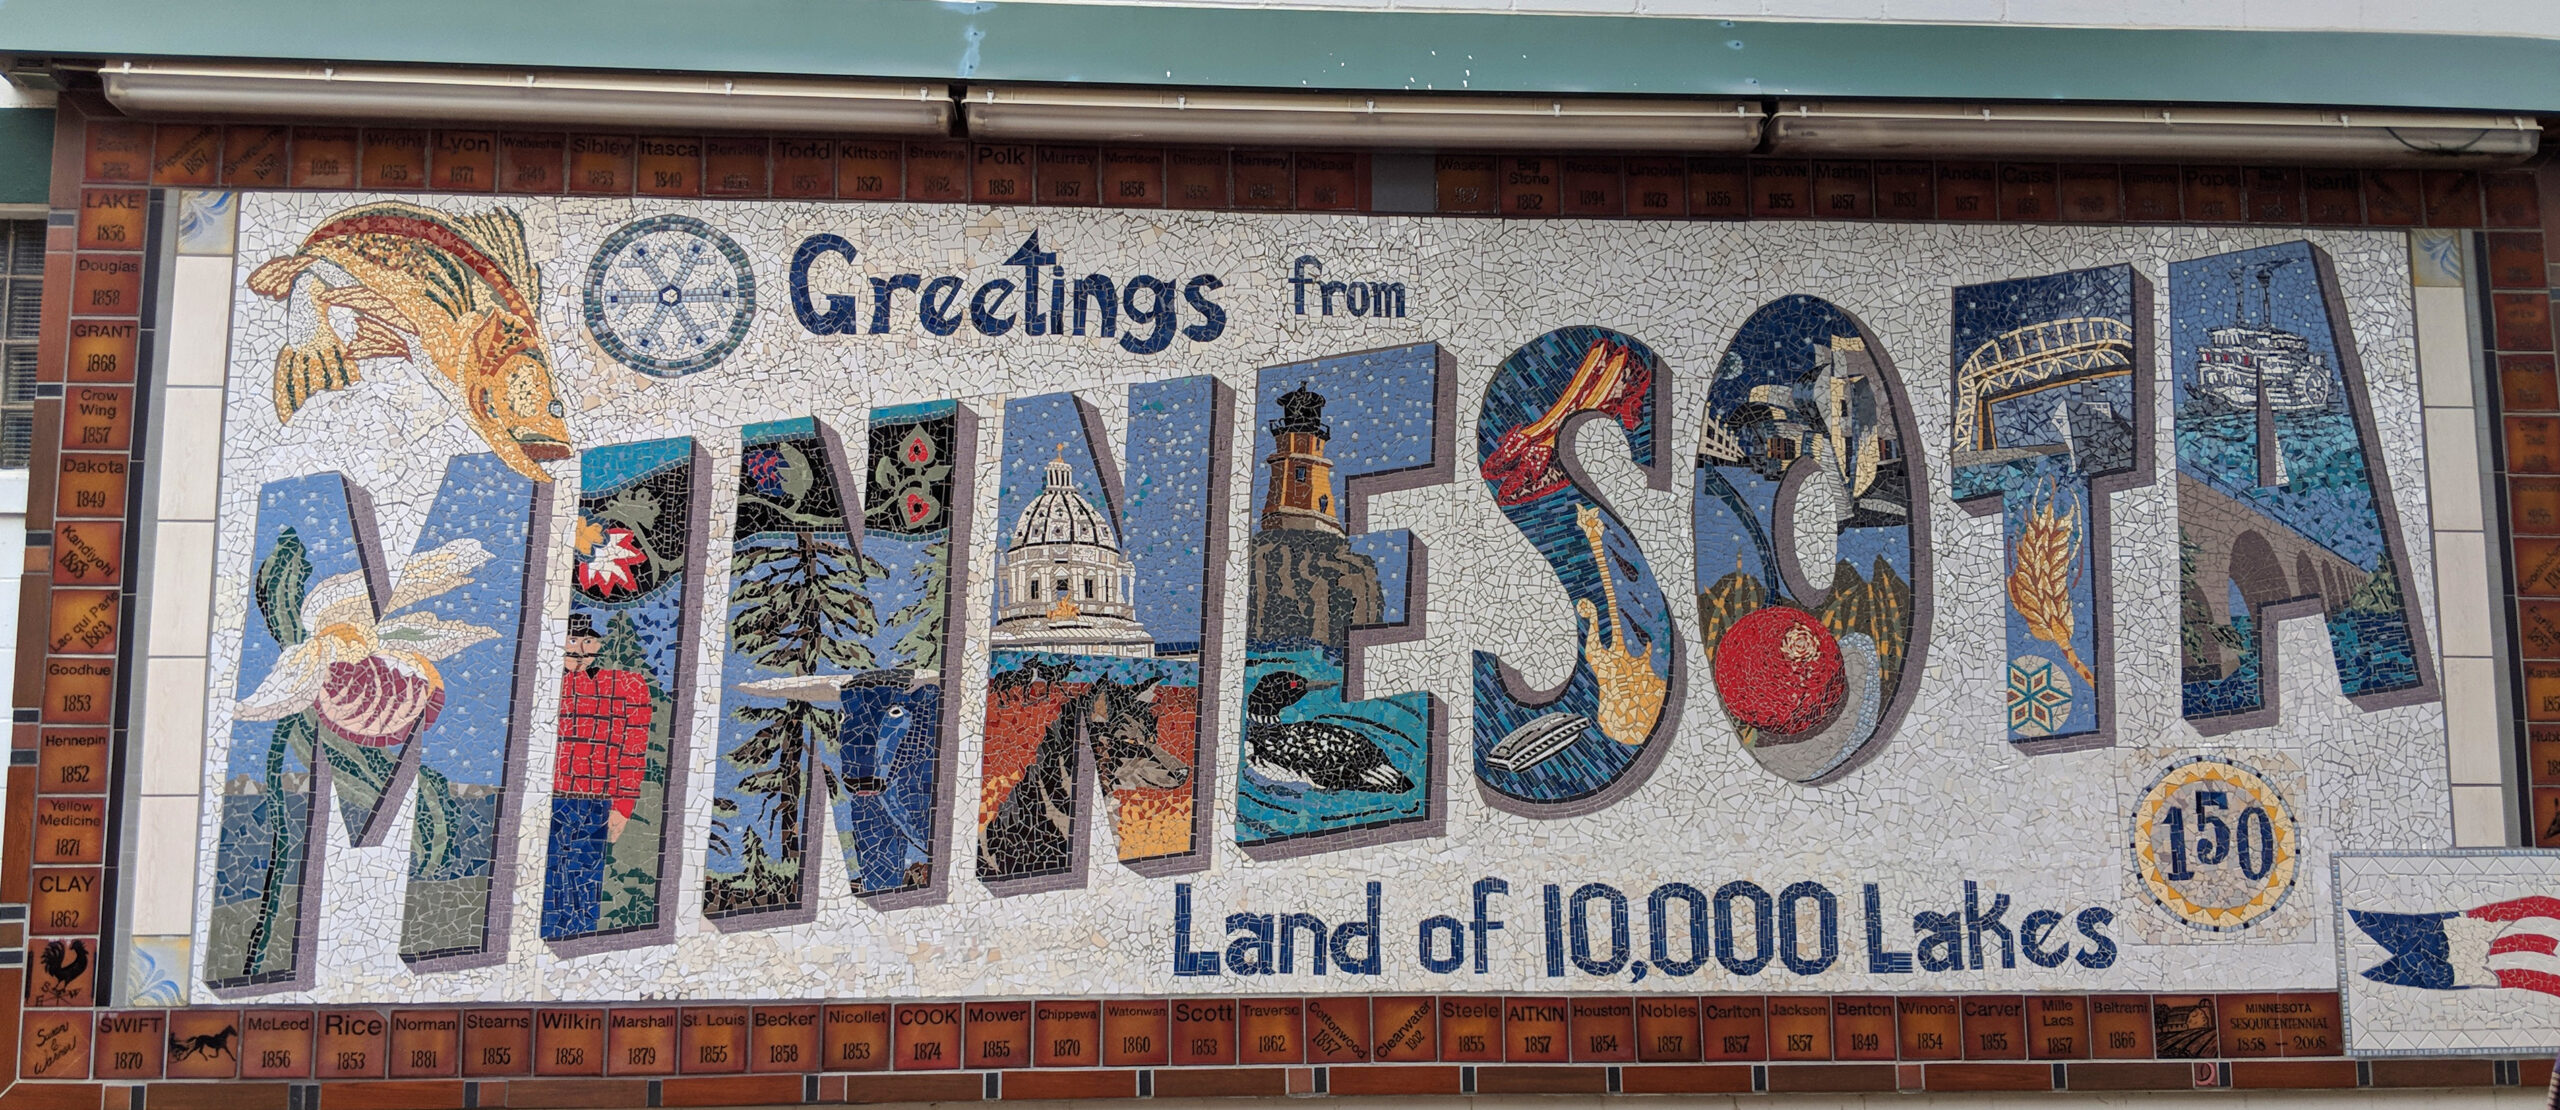 travel postcard mosaic commemorates 150 years of Minnesota Statehood